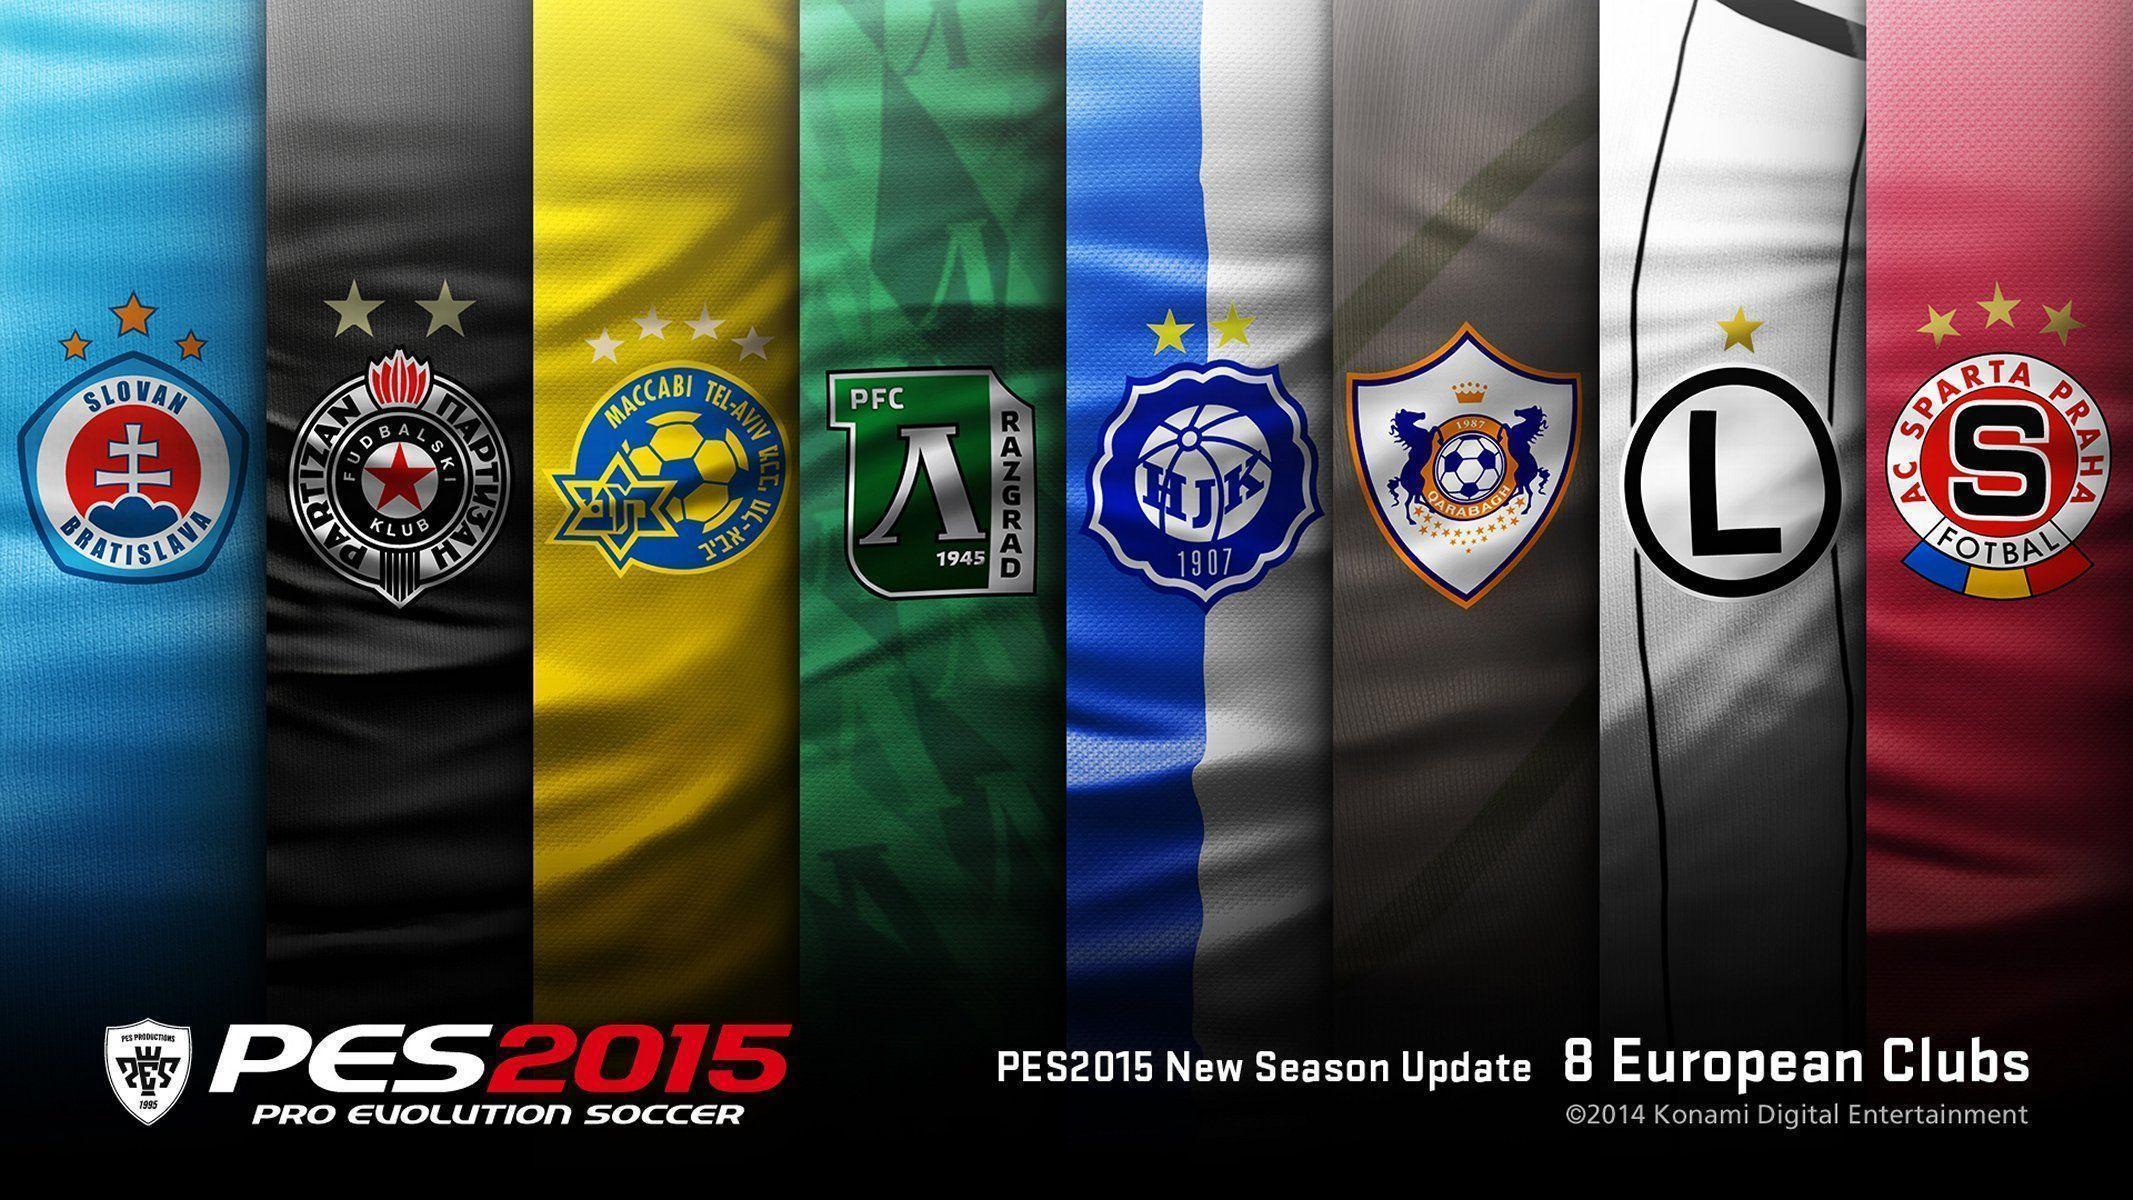 PES 2015 data pack with big license update. Pro Evolution Soccer